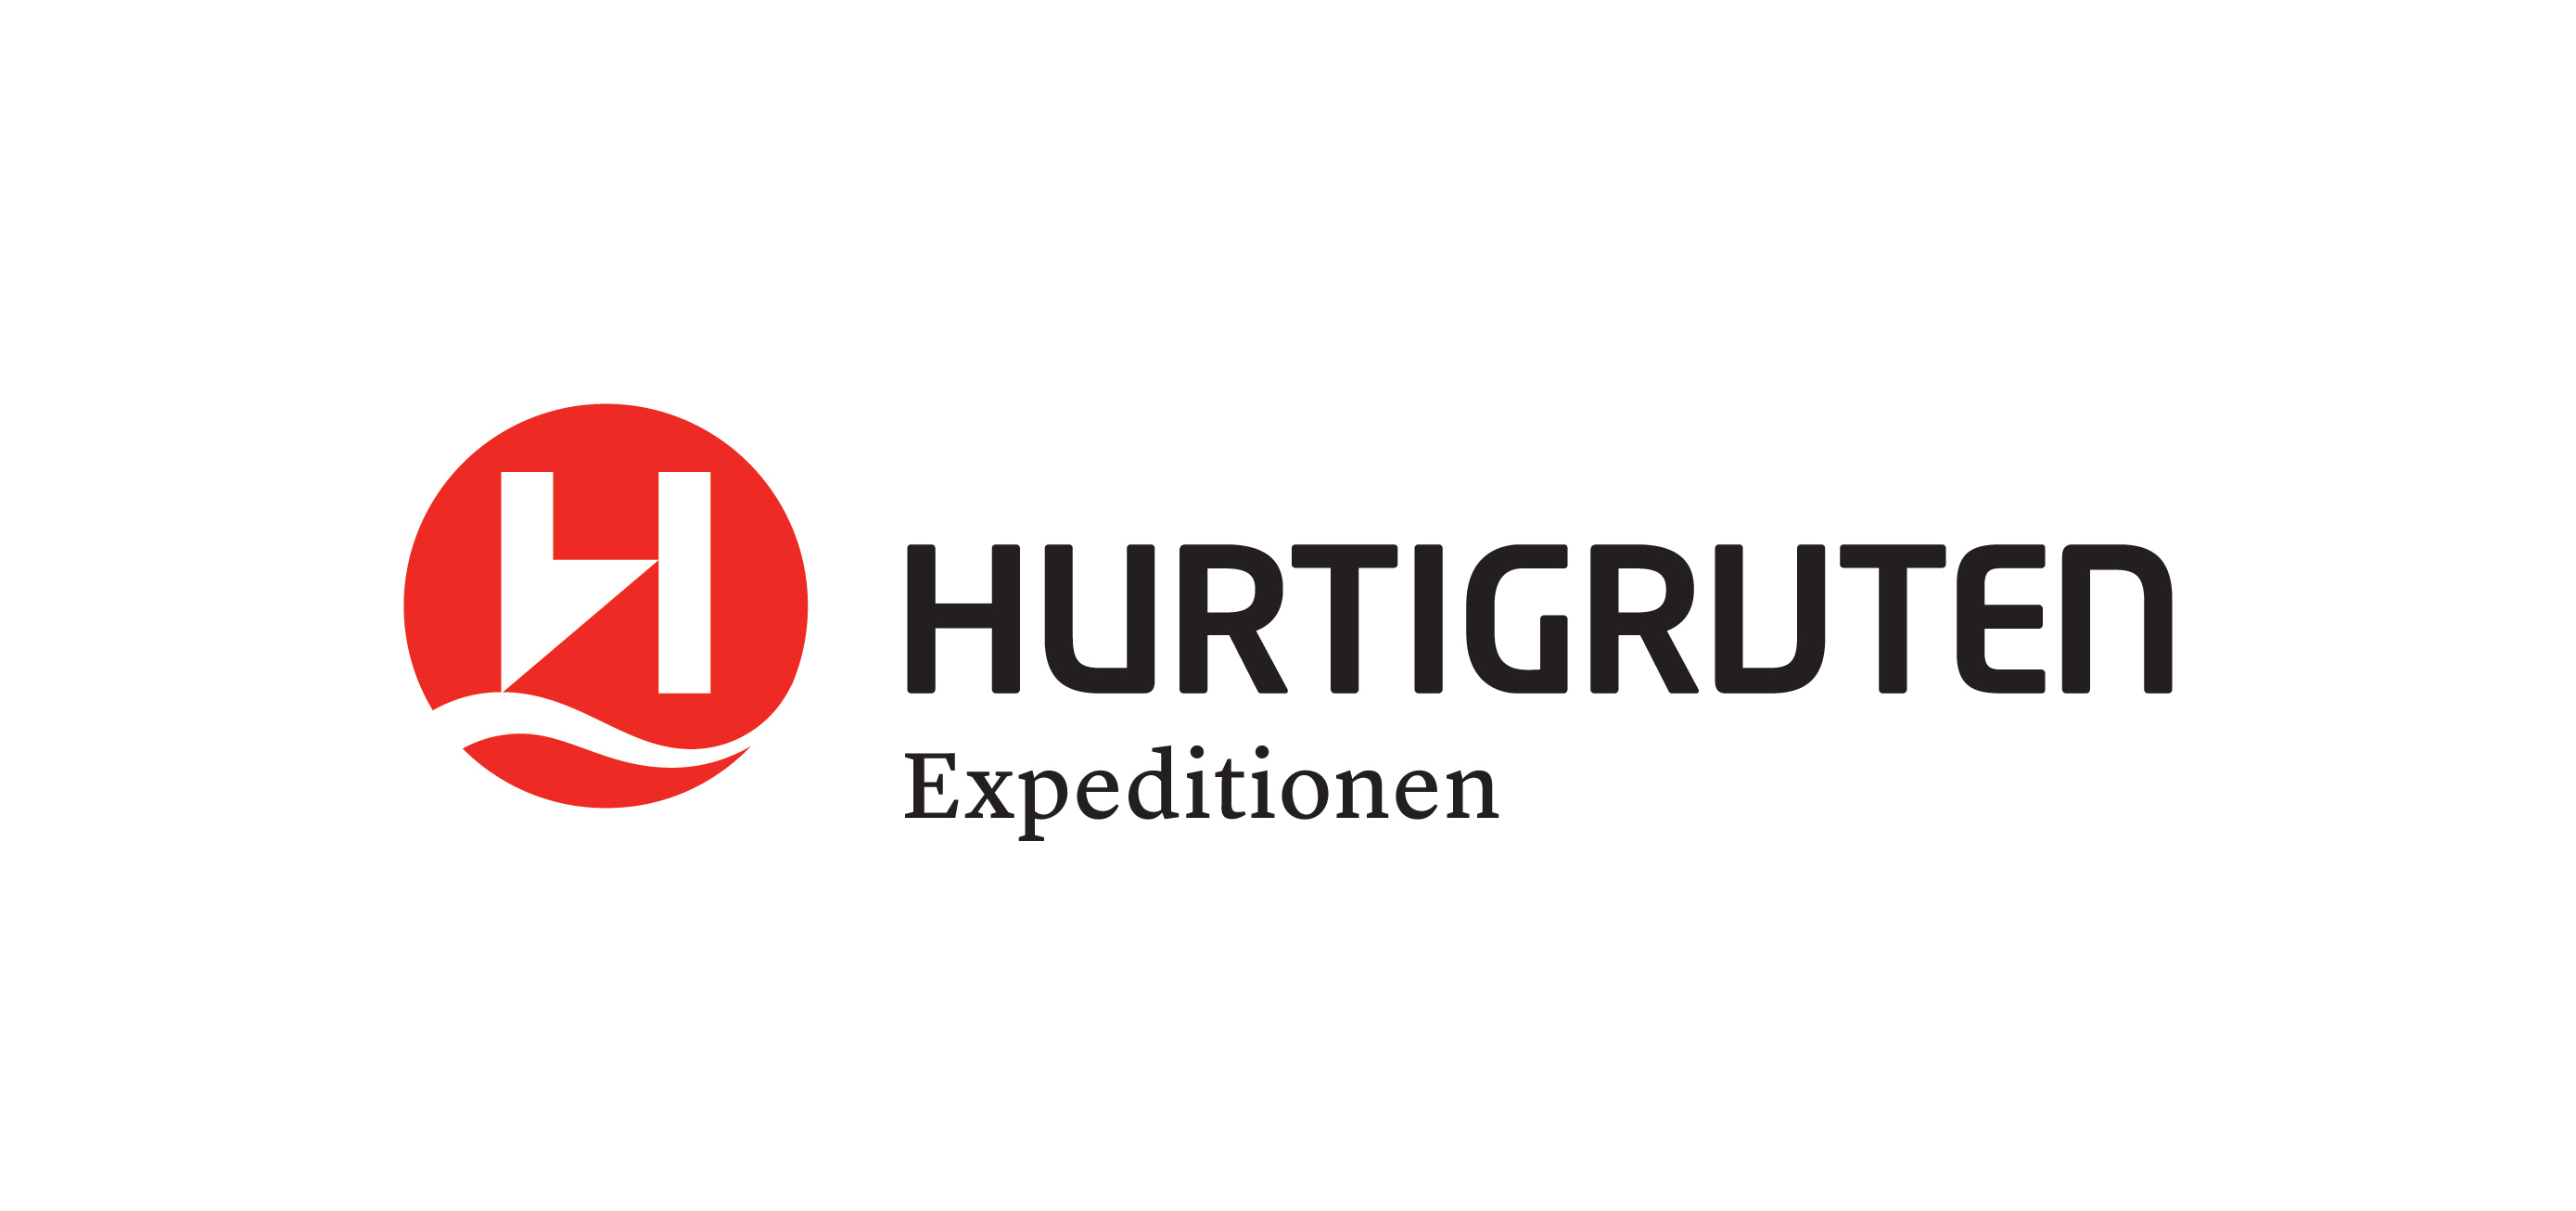 Hurtigruten logo CMYK primary red-positive 01